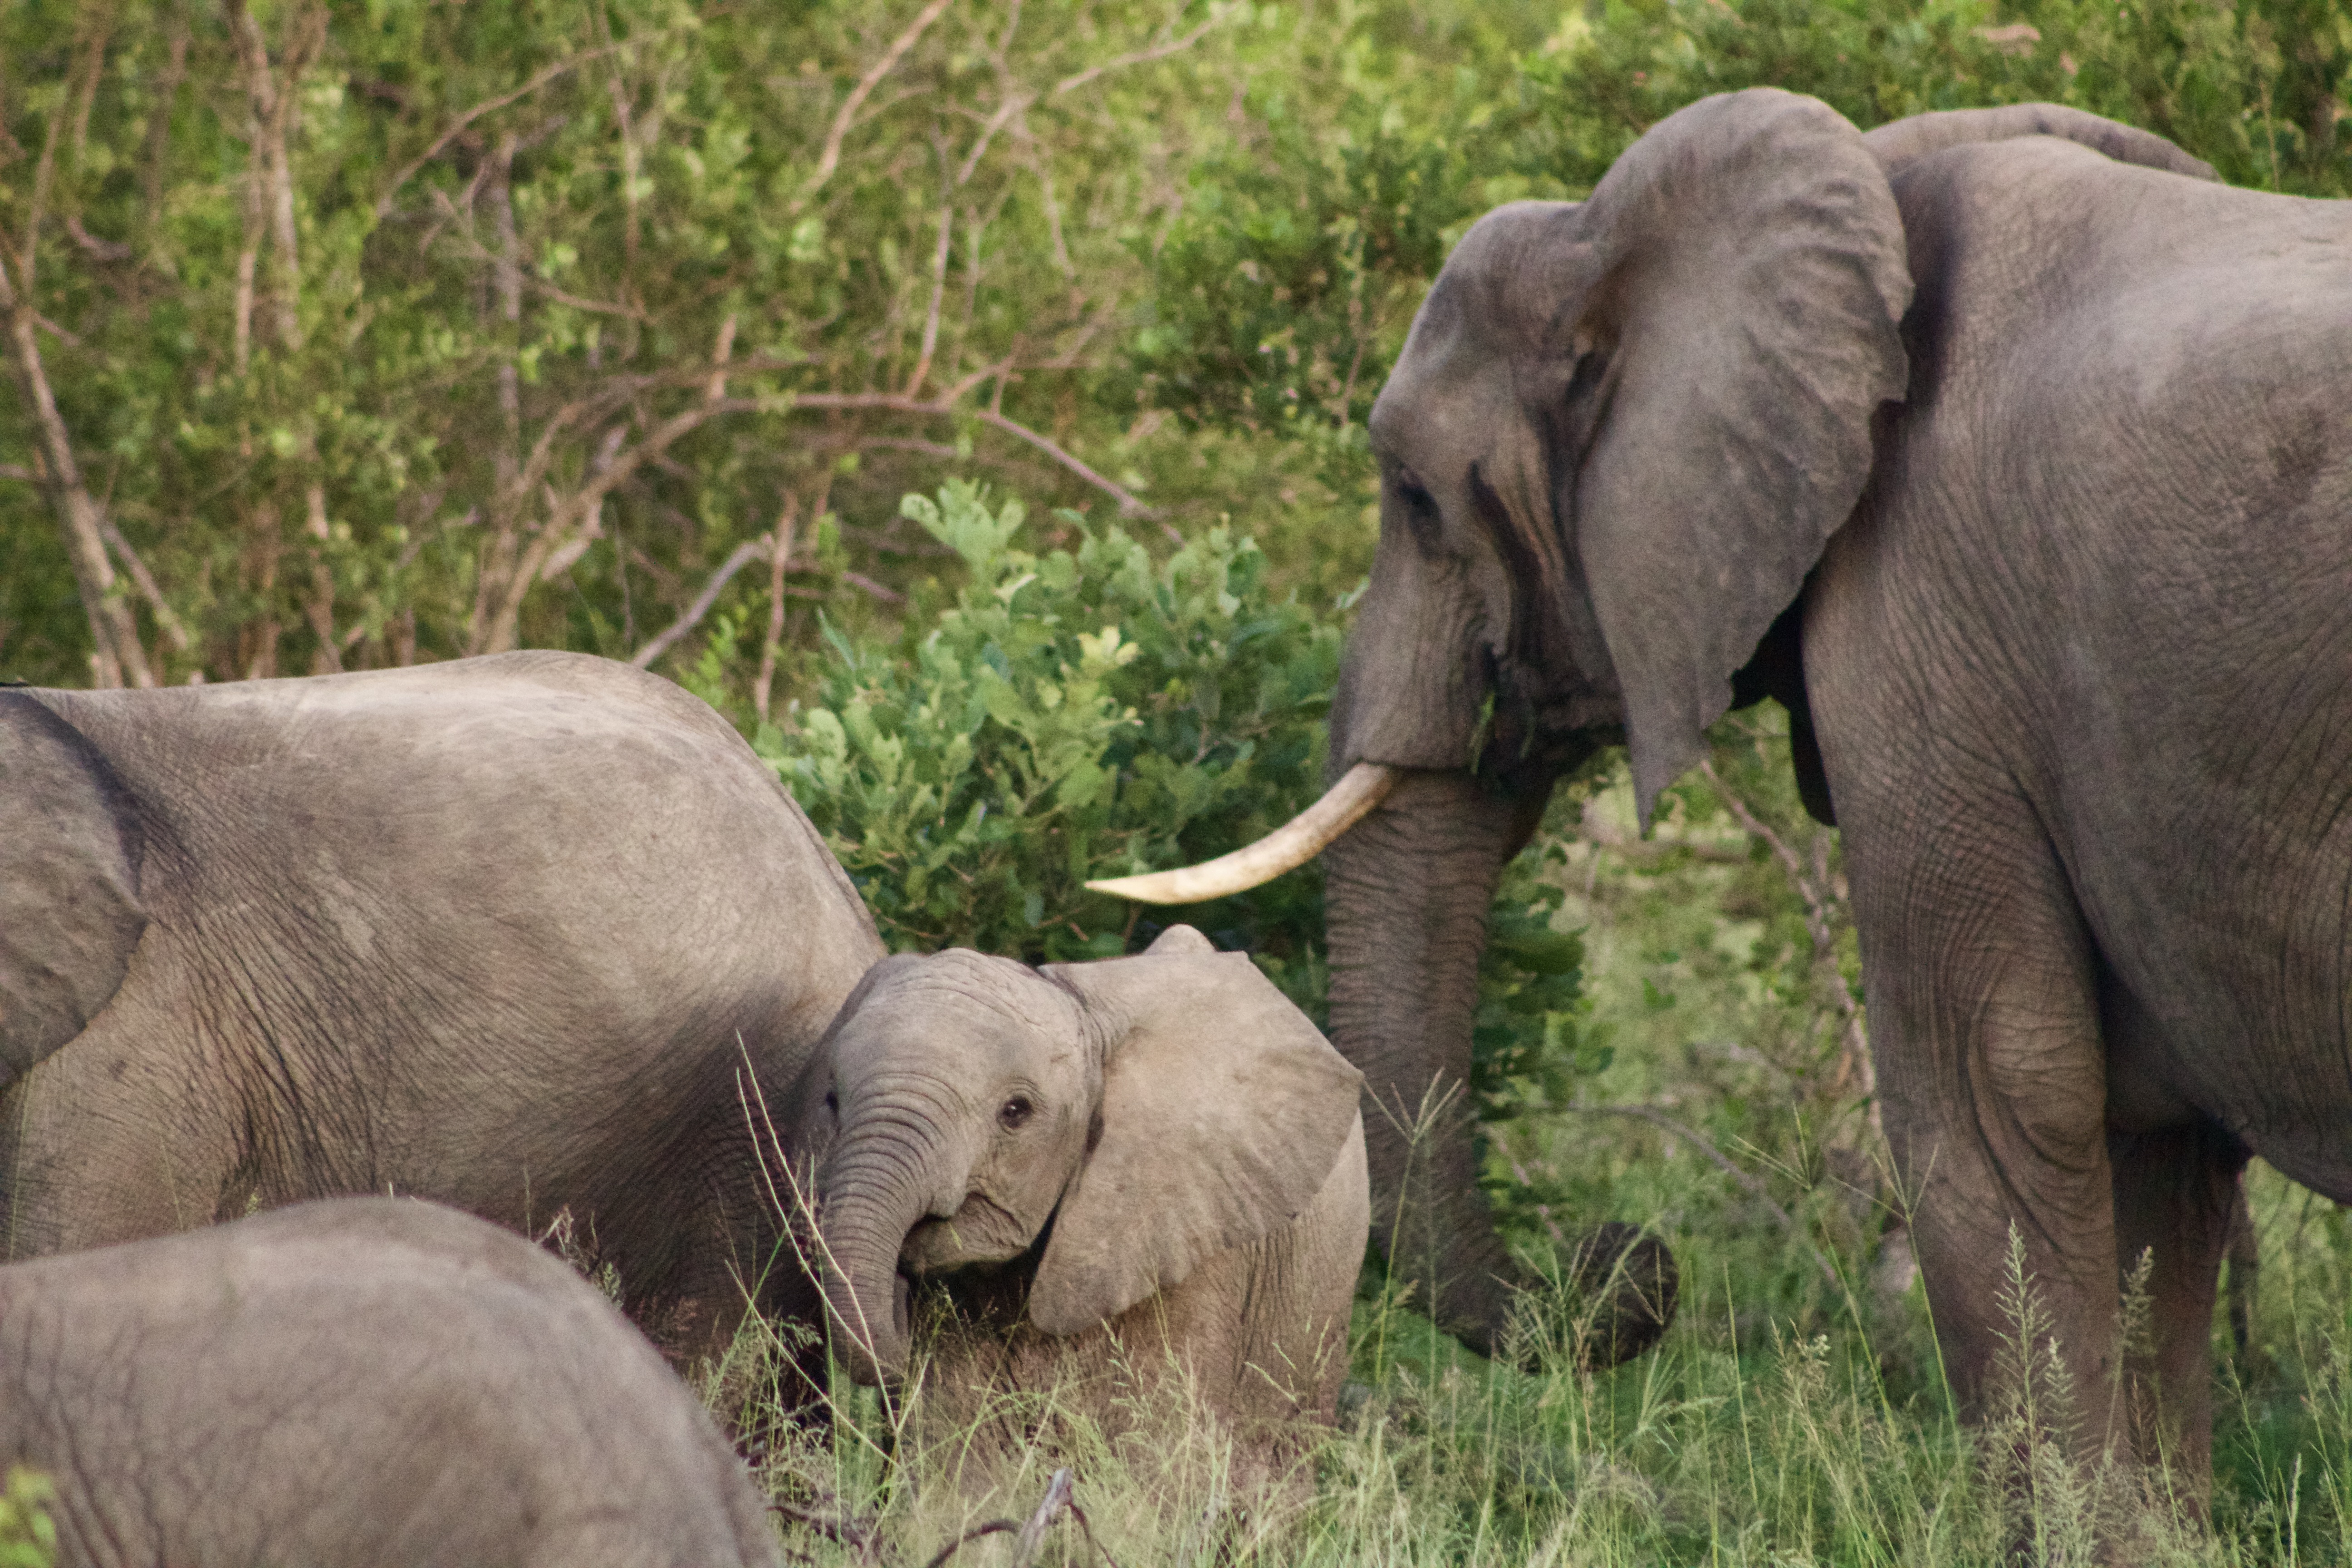 Exploring wildlife on safari in Kruger National Park. Photo by Erin Flynn.